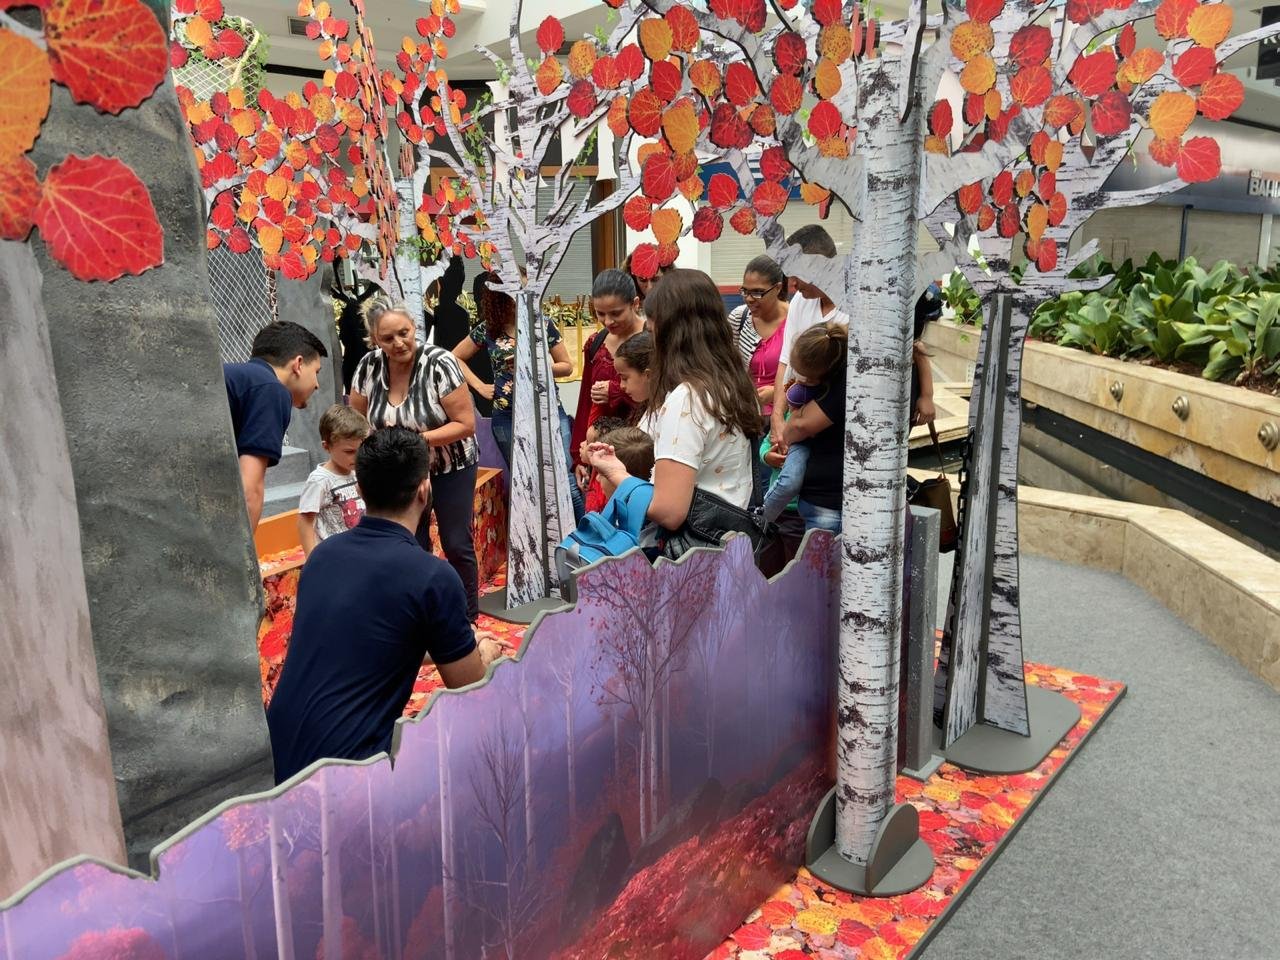  Crianças autistas participam de sessão exclusiva no evento “Frozen II” no Iguatemi Esplanada